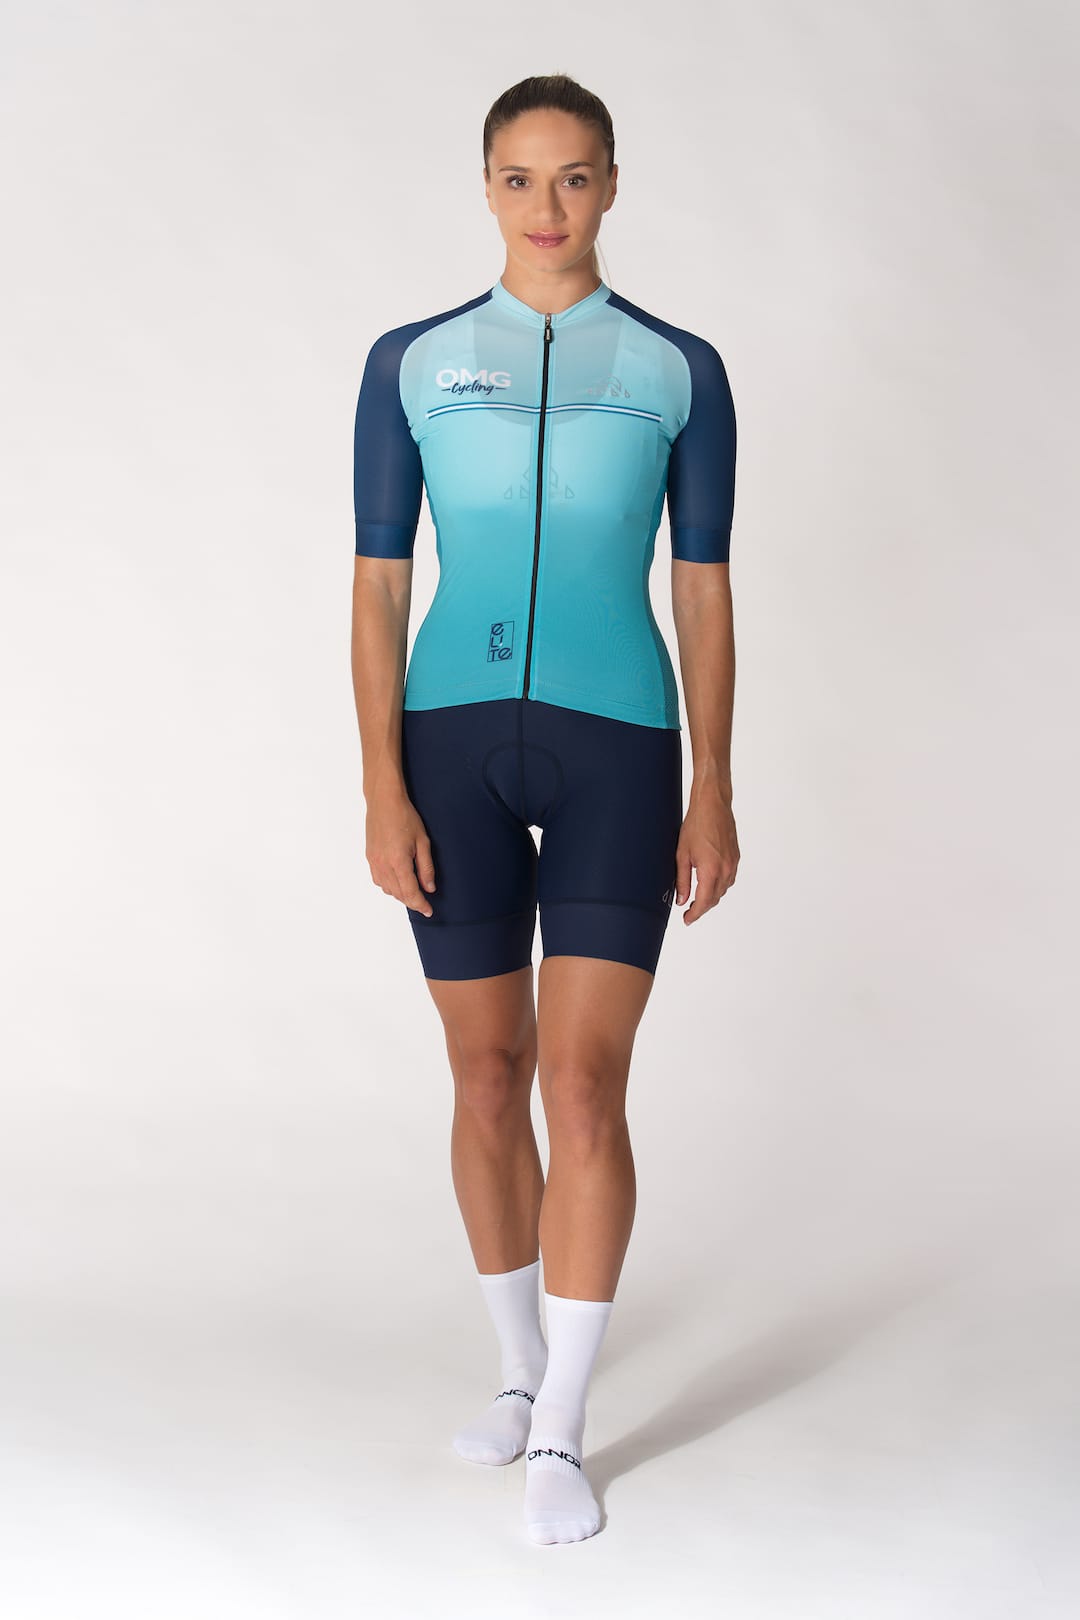 custom cycling jersey miami dade , customized bike jersey, custom cycling jersey made in usa